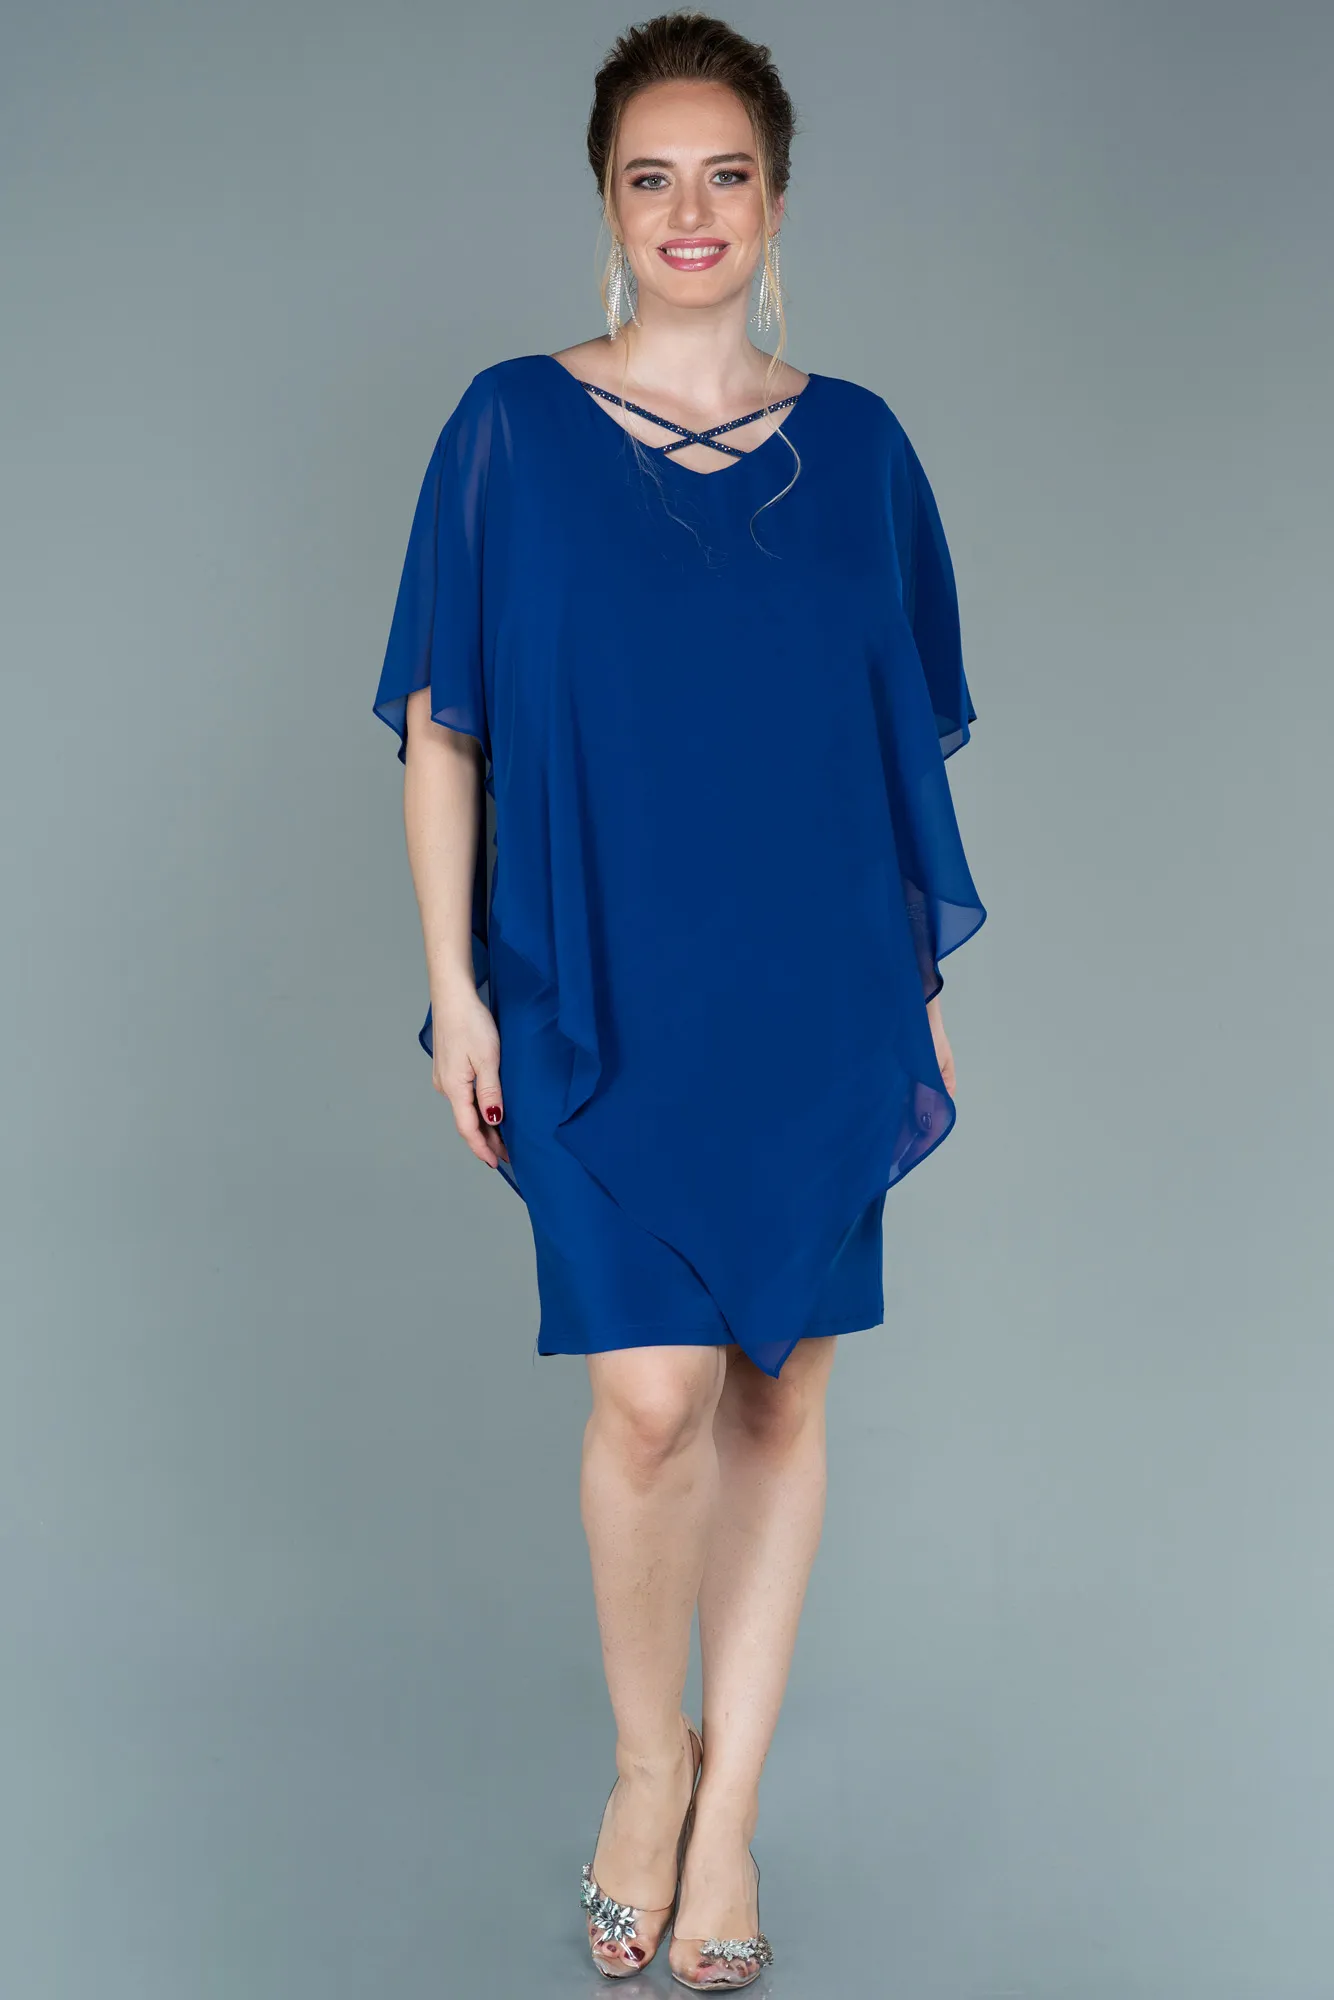 Sax Blue-Short Chiffon Plus Size Evening Dress ABK1494